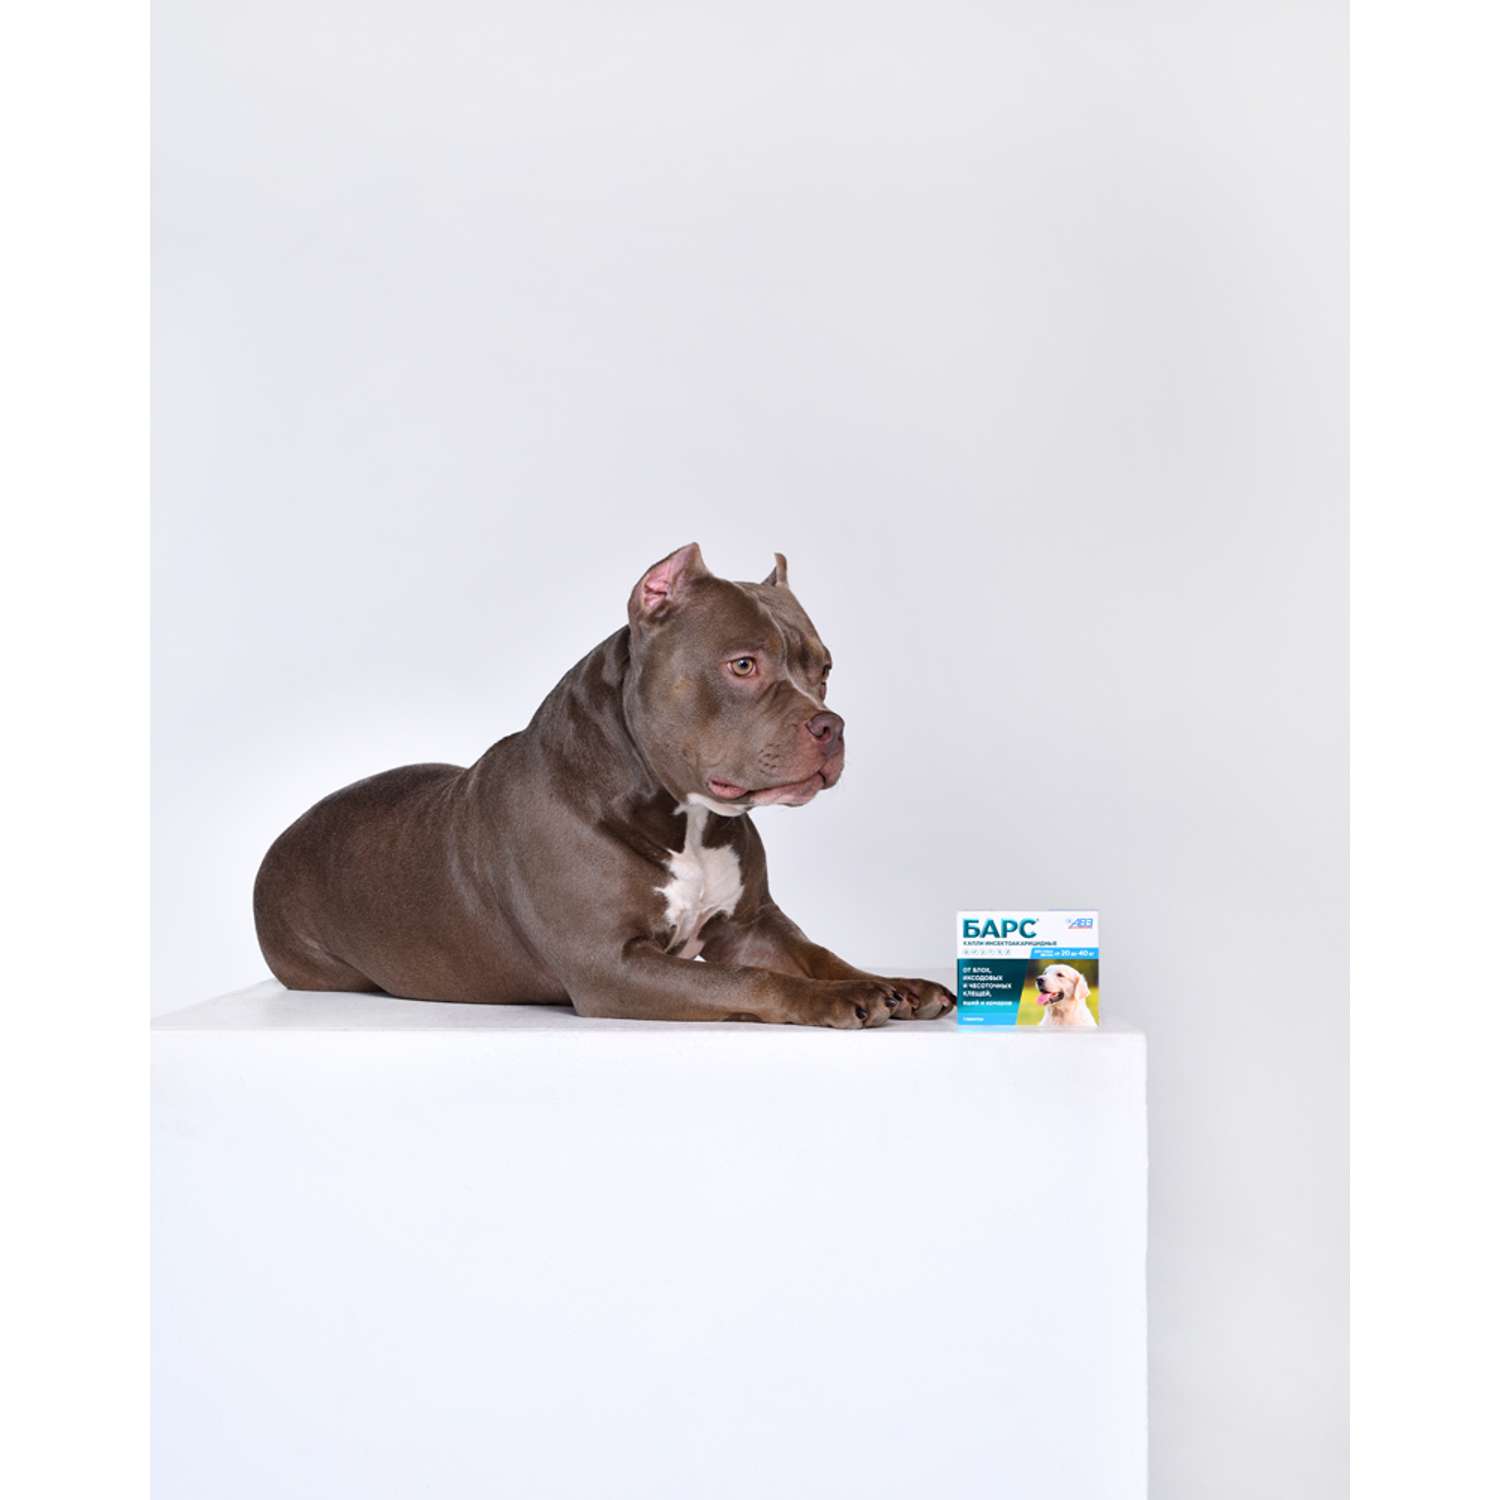 Барс для собак 20 40 кг. АВЗ Барс собака реклама 2015.